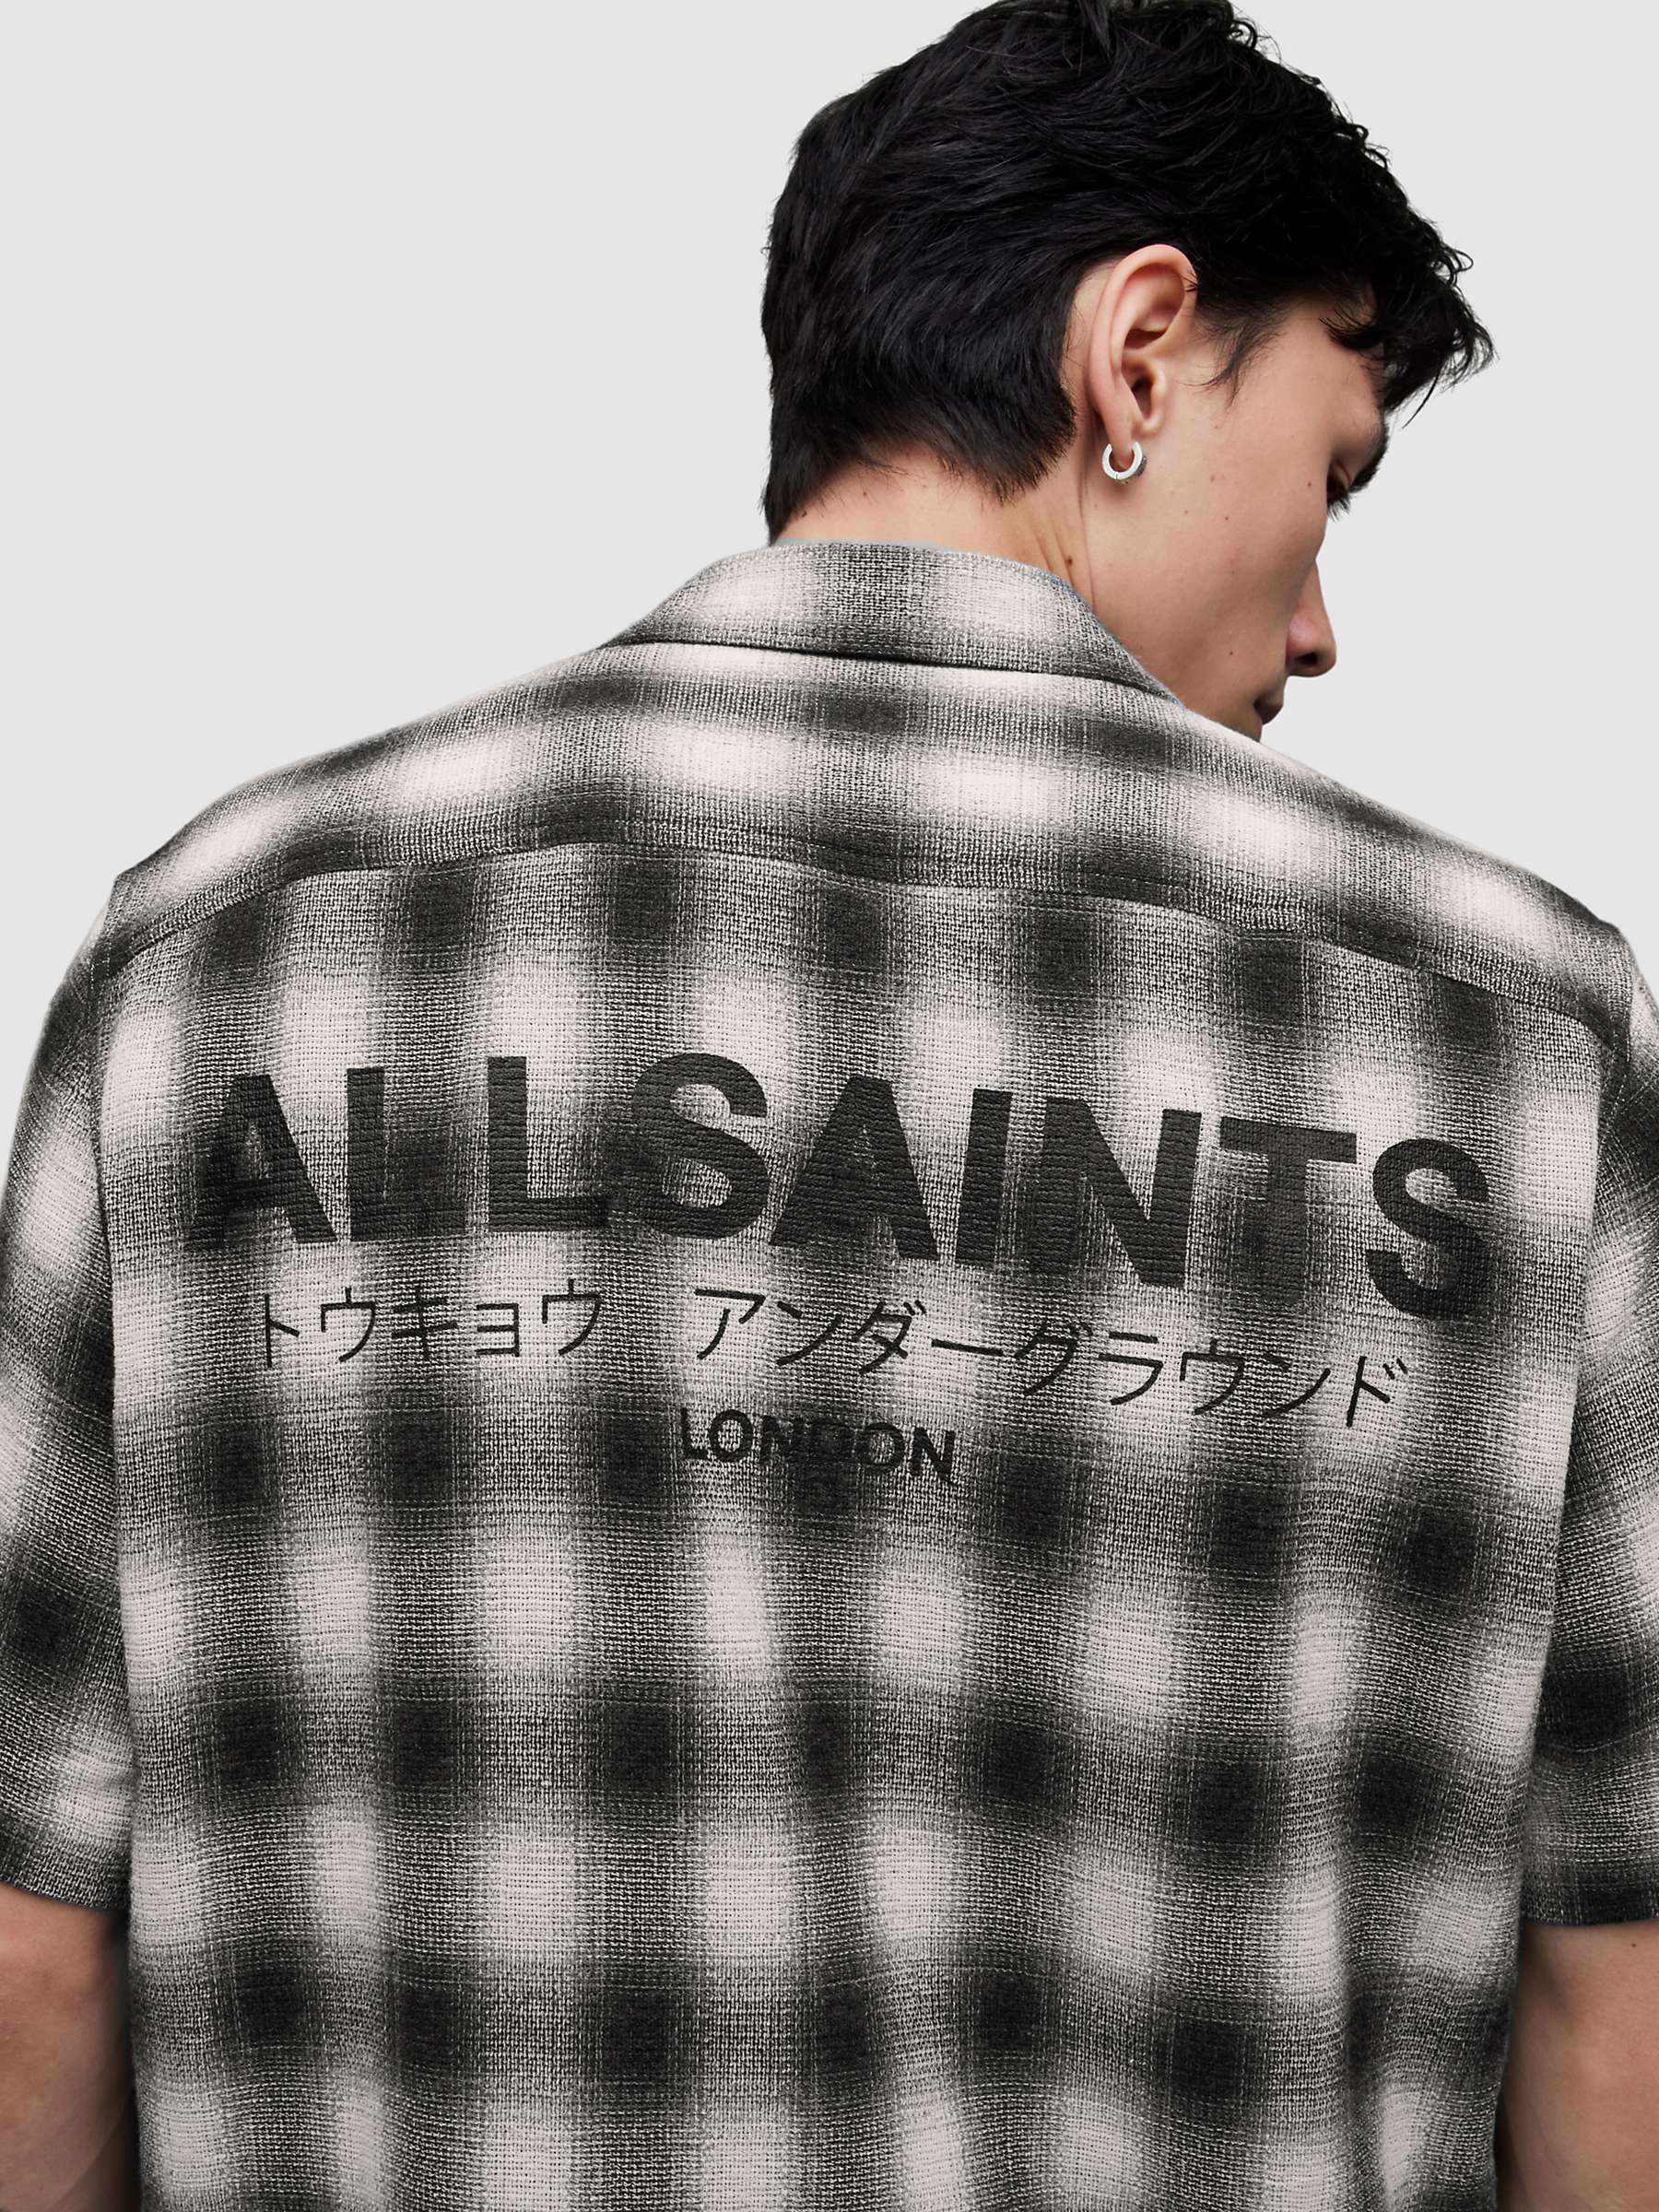 Buy AllSaints Underground Check Shirt, White/Black Online at johnlewis.com